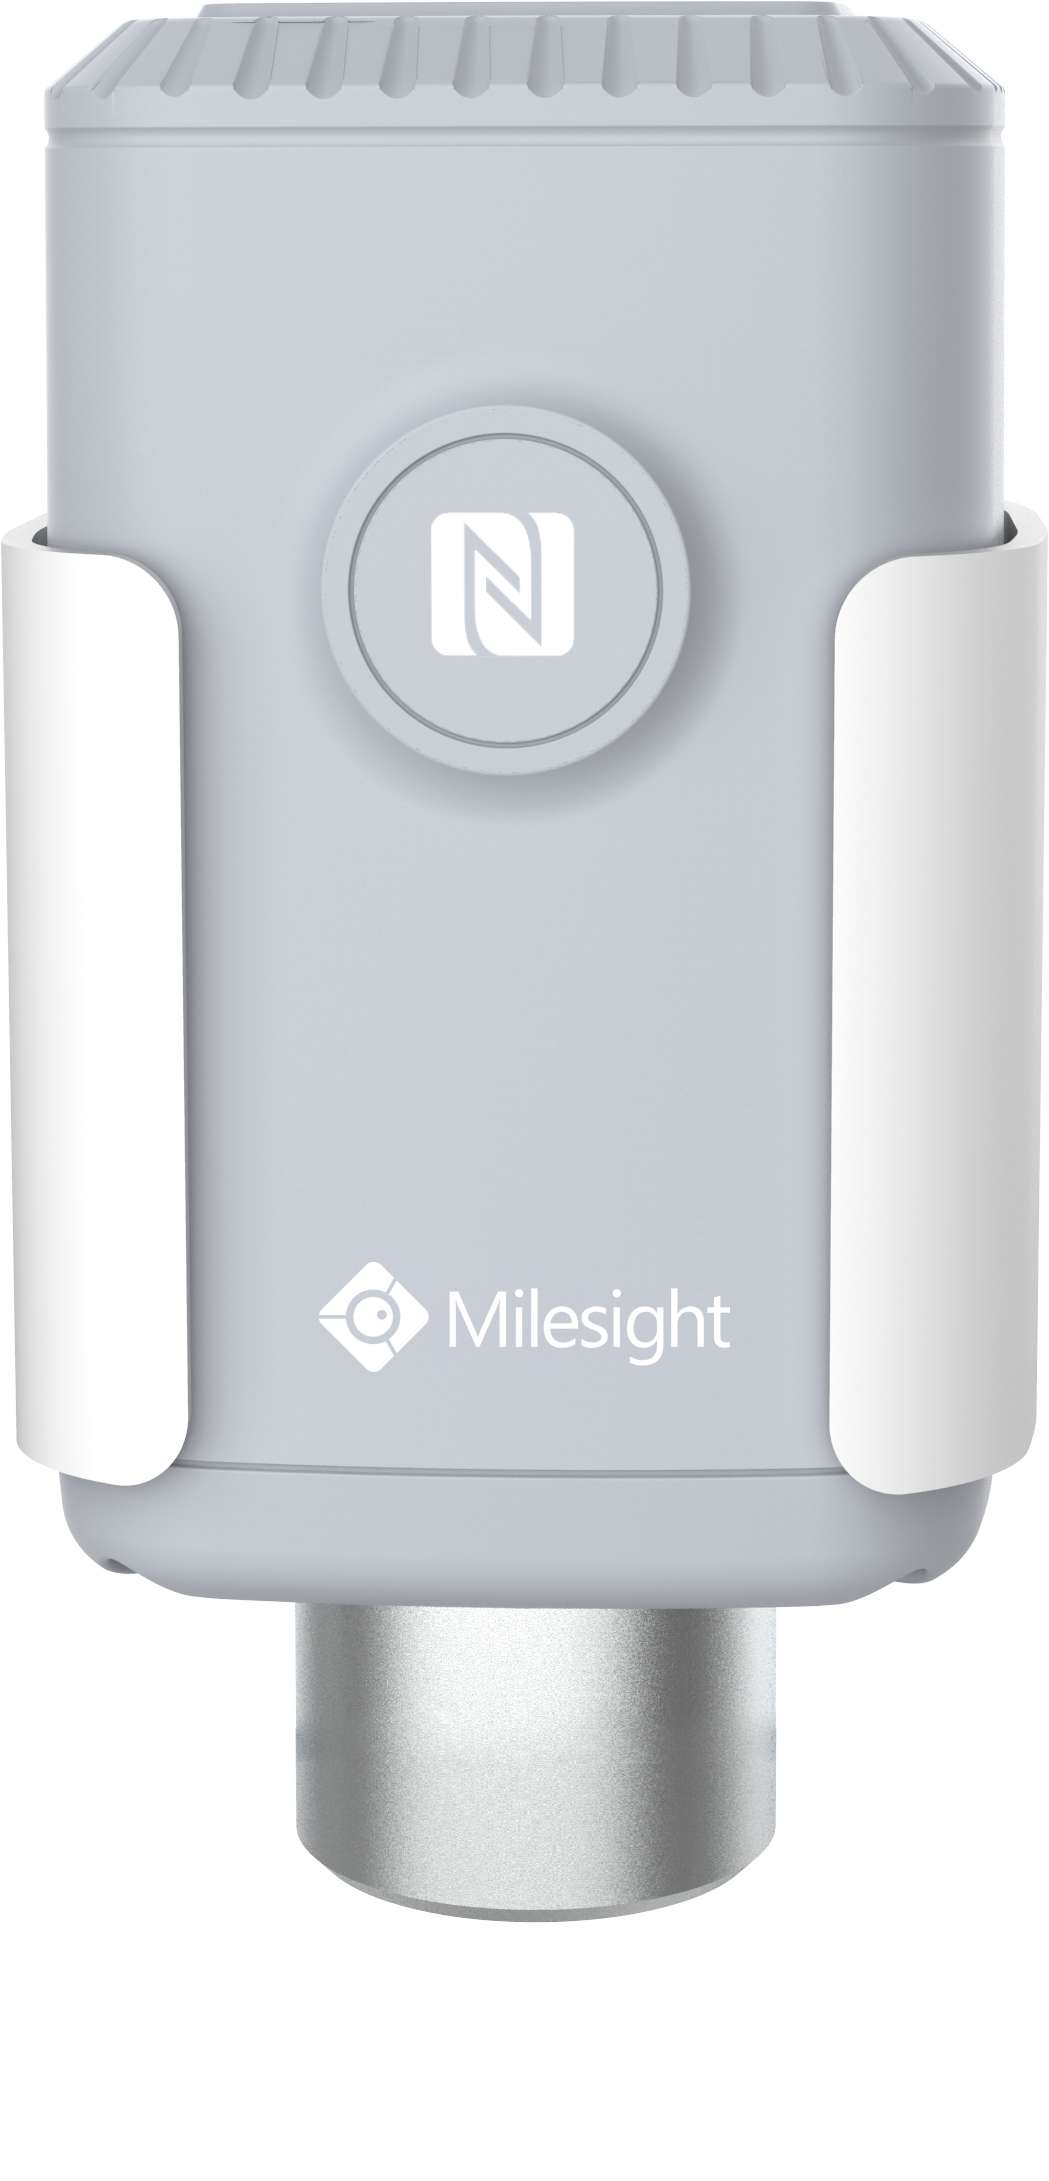 Milesight EM500-CO2